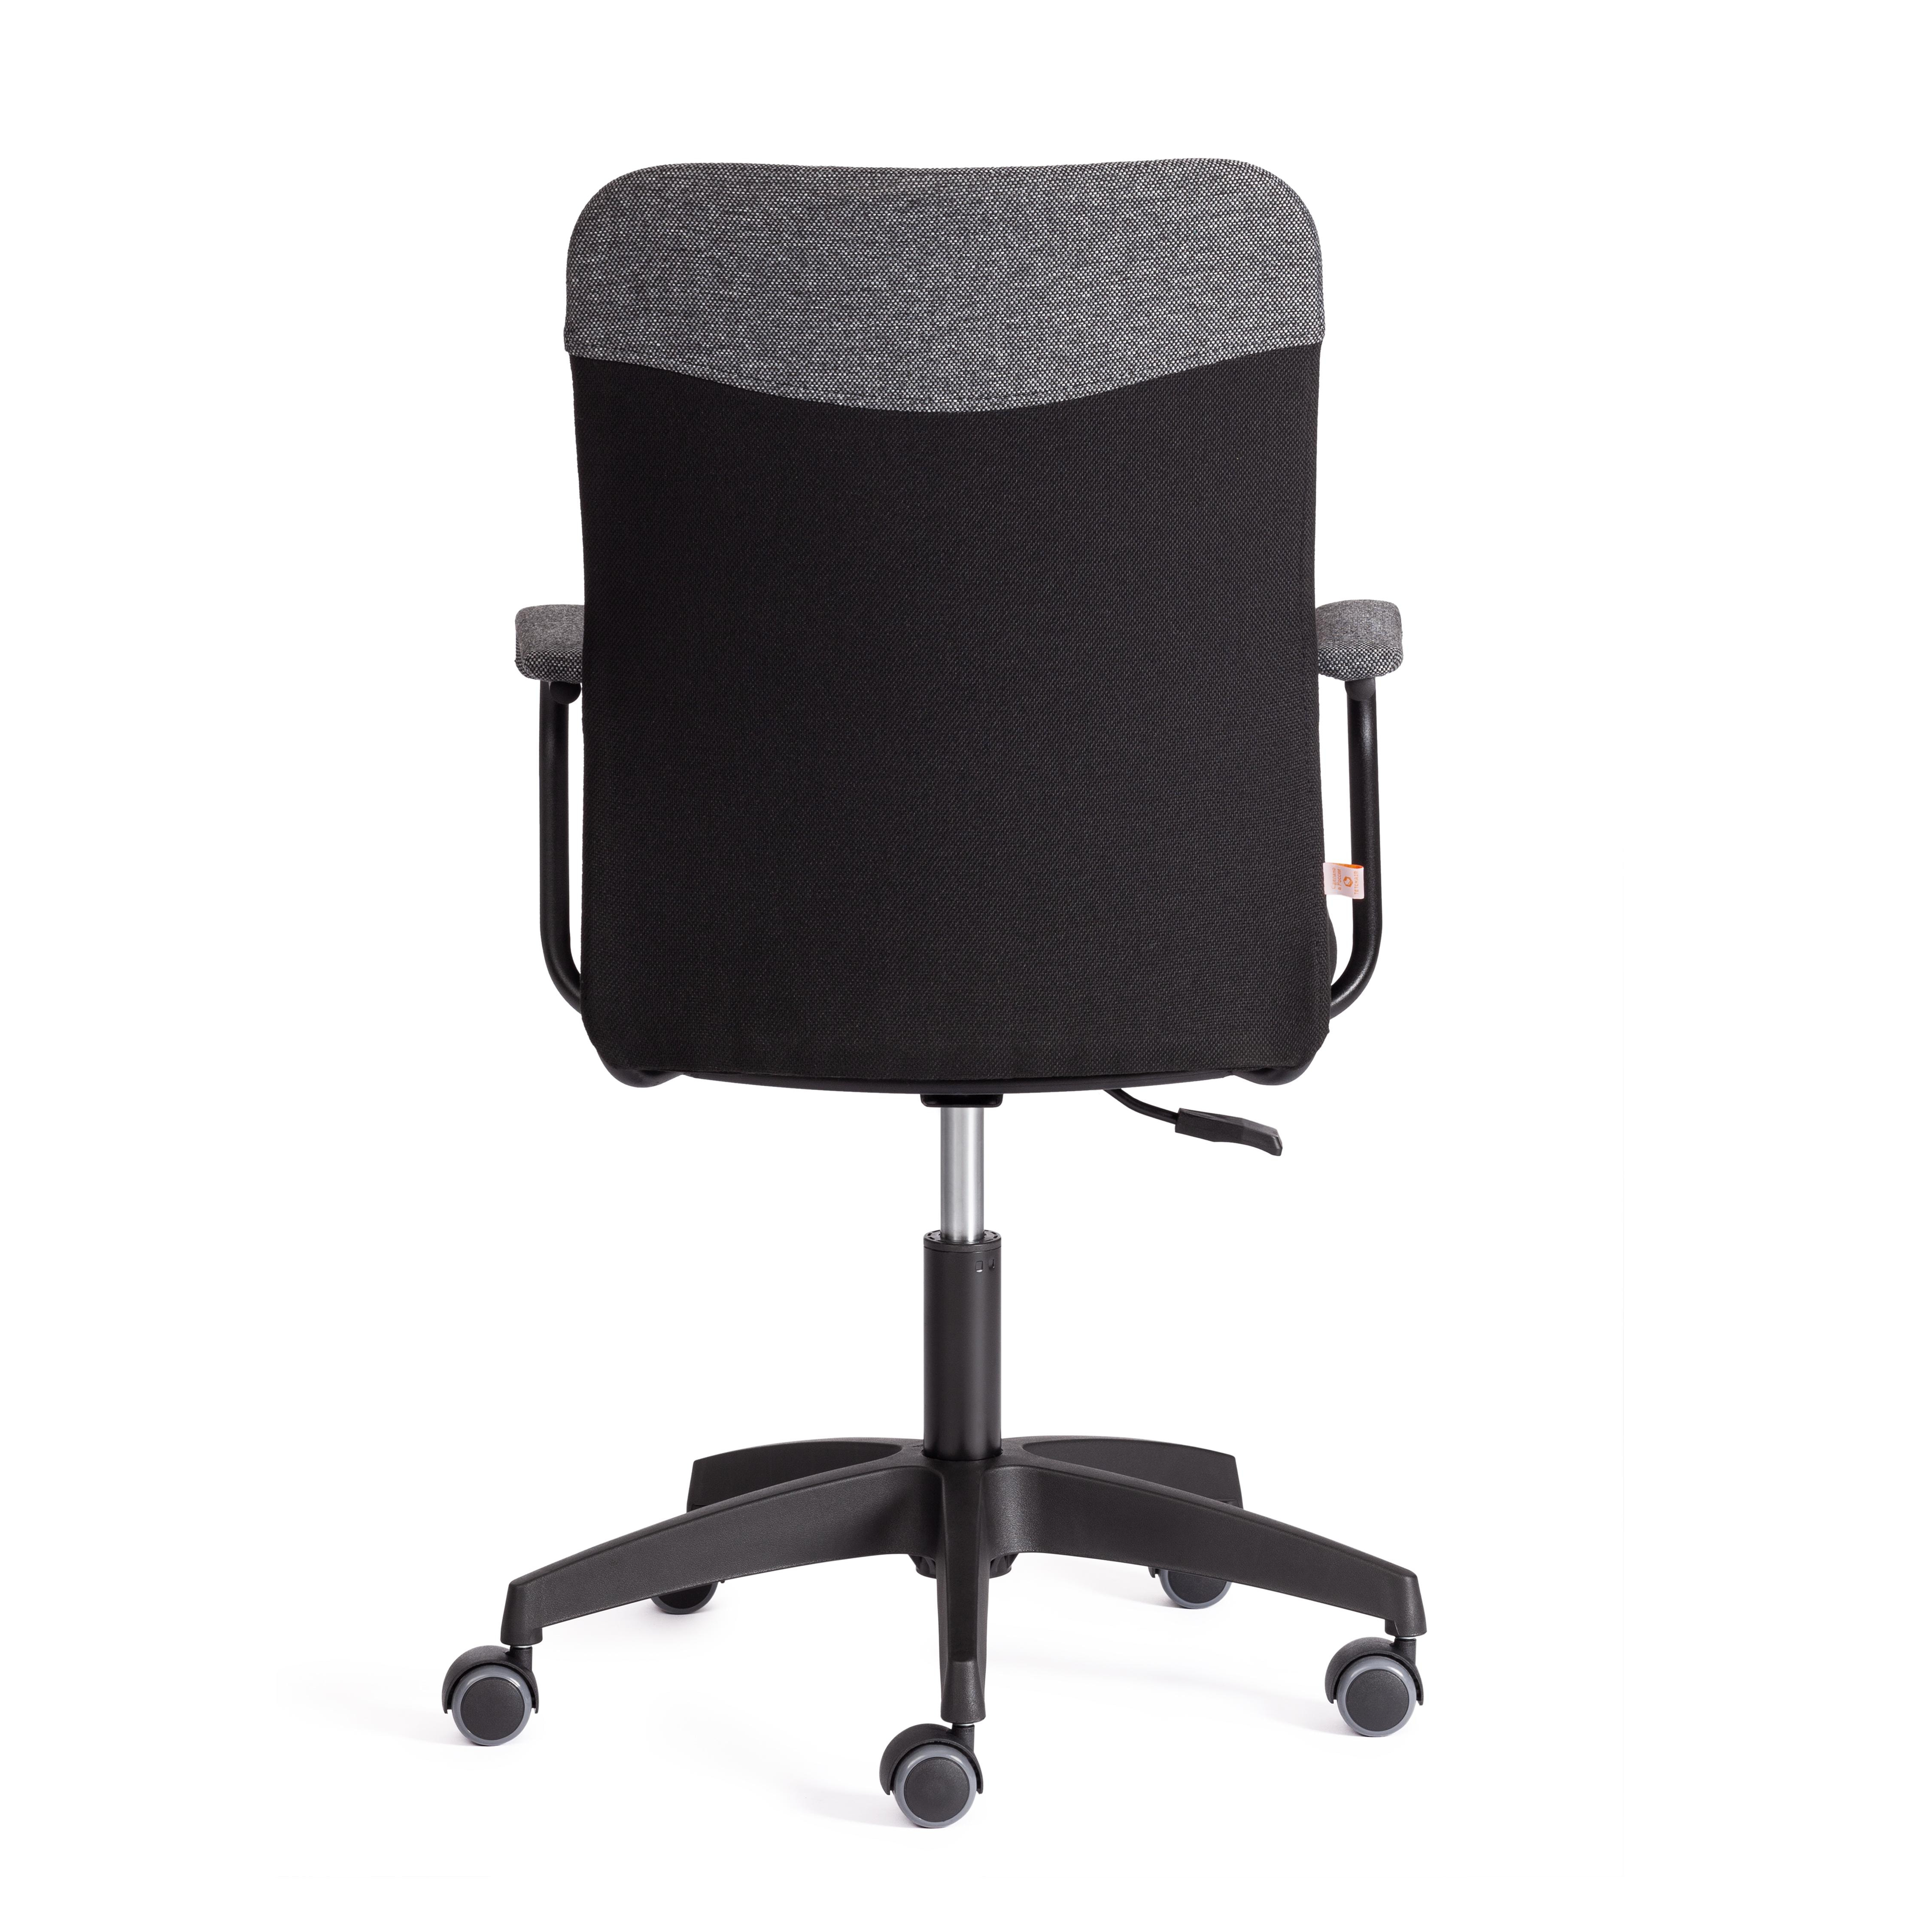 Кресло FLY ткань, серый/черный, 207/2603